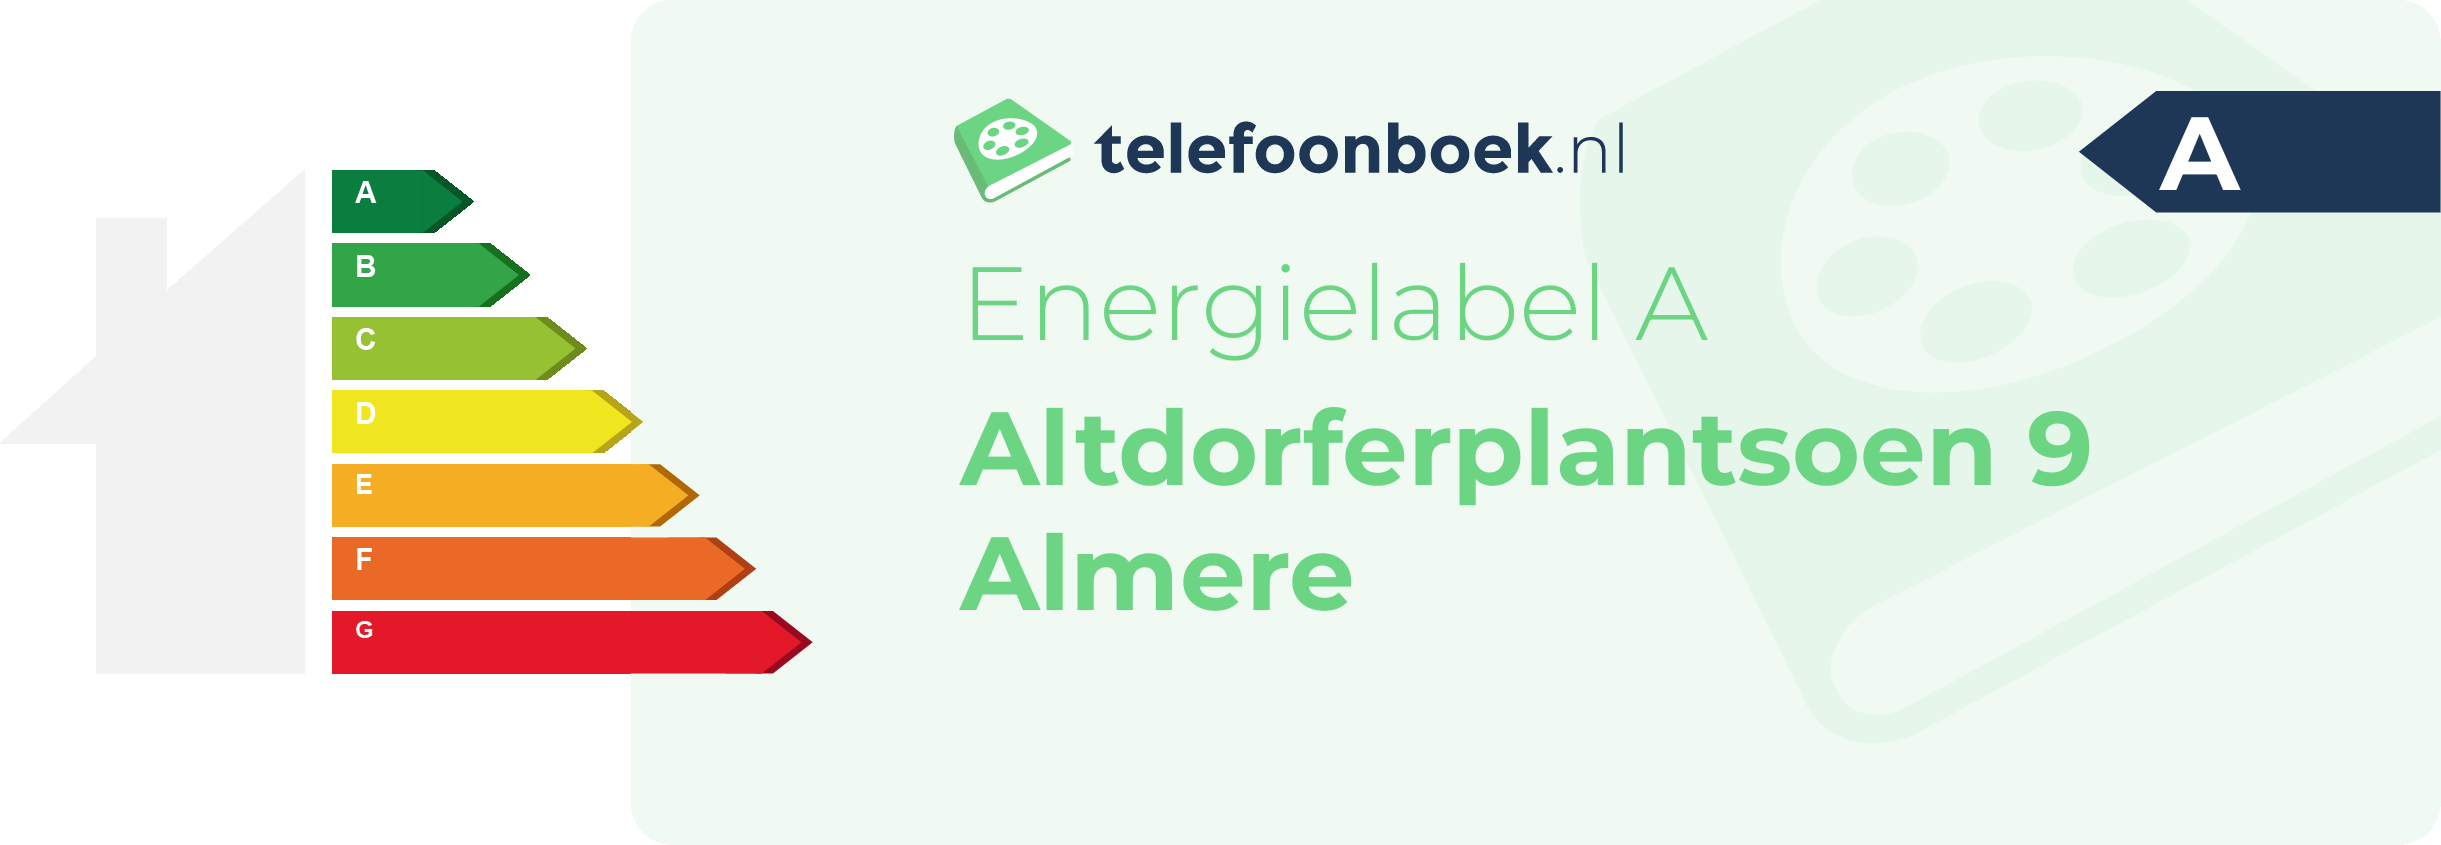 Energielabel Altdorferplantsoen 9 Almere